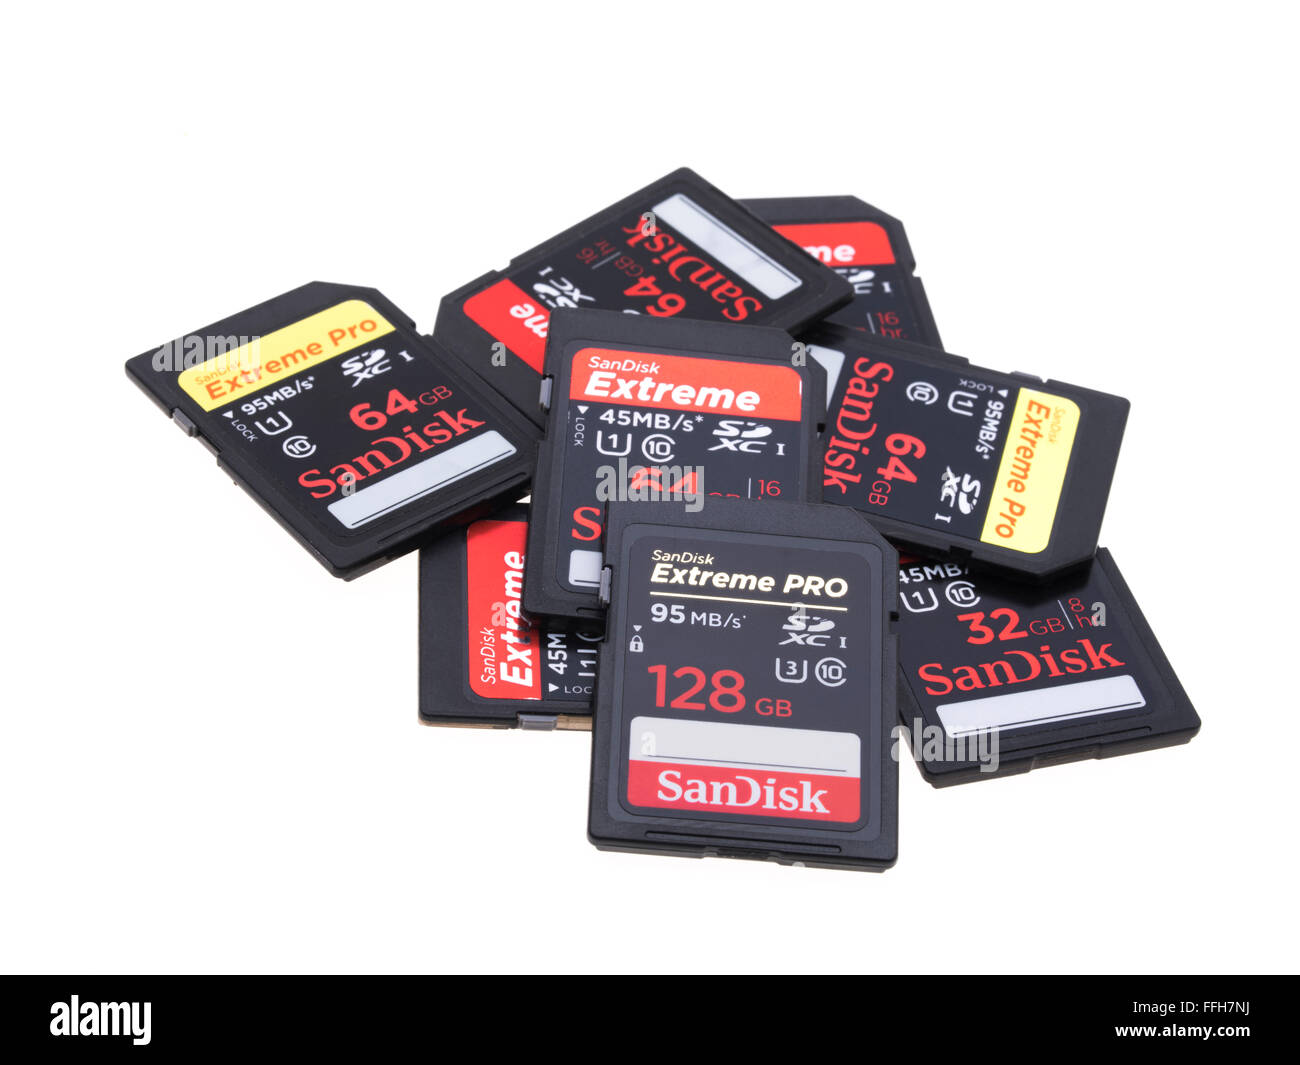 SanDisk memory cards , flash memory data storage devices used in digital cameras SanDisk Corp / Western Digital Stock Photo